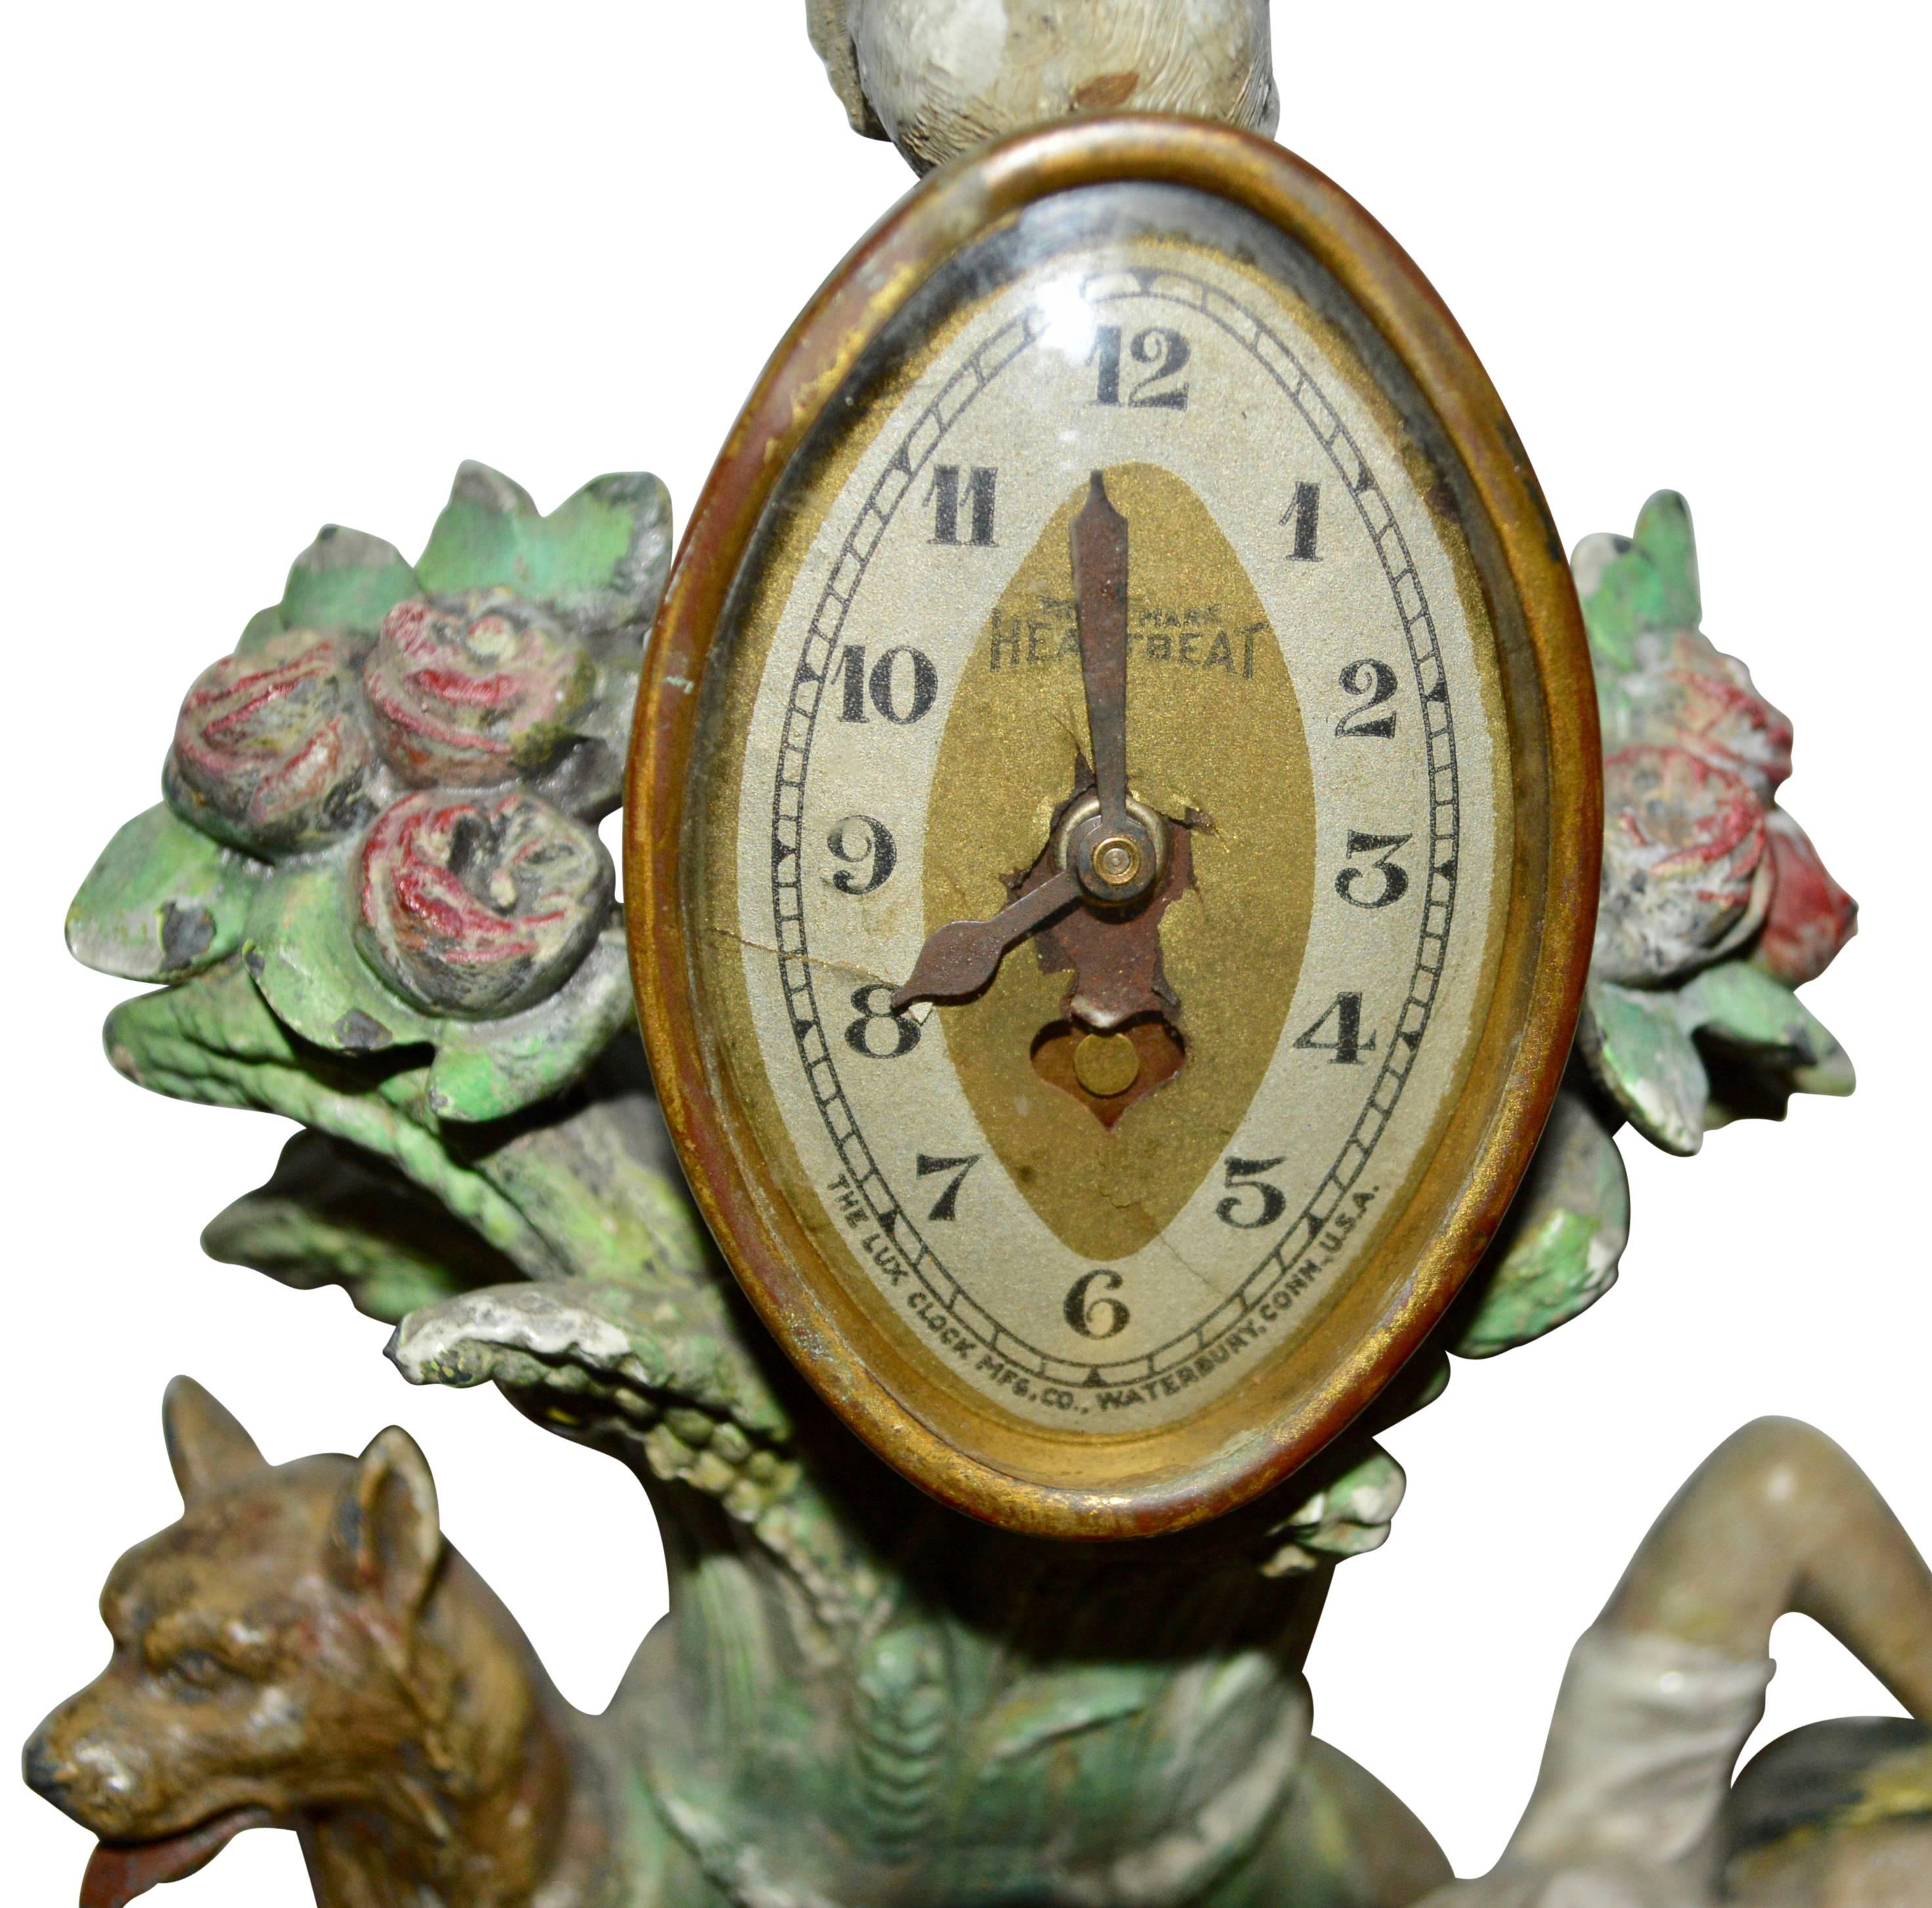 Forged Rare Waterbury Mantel Clock